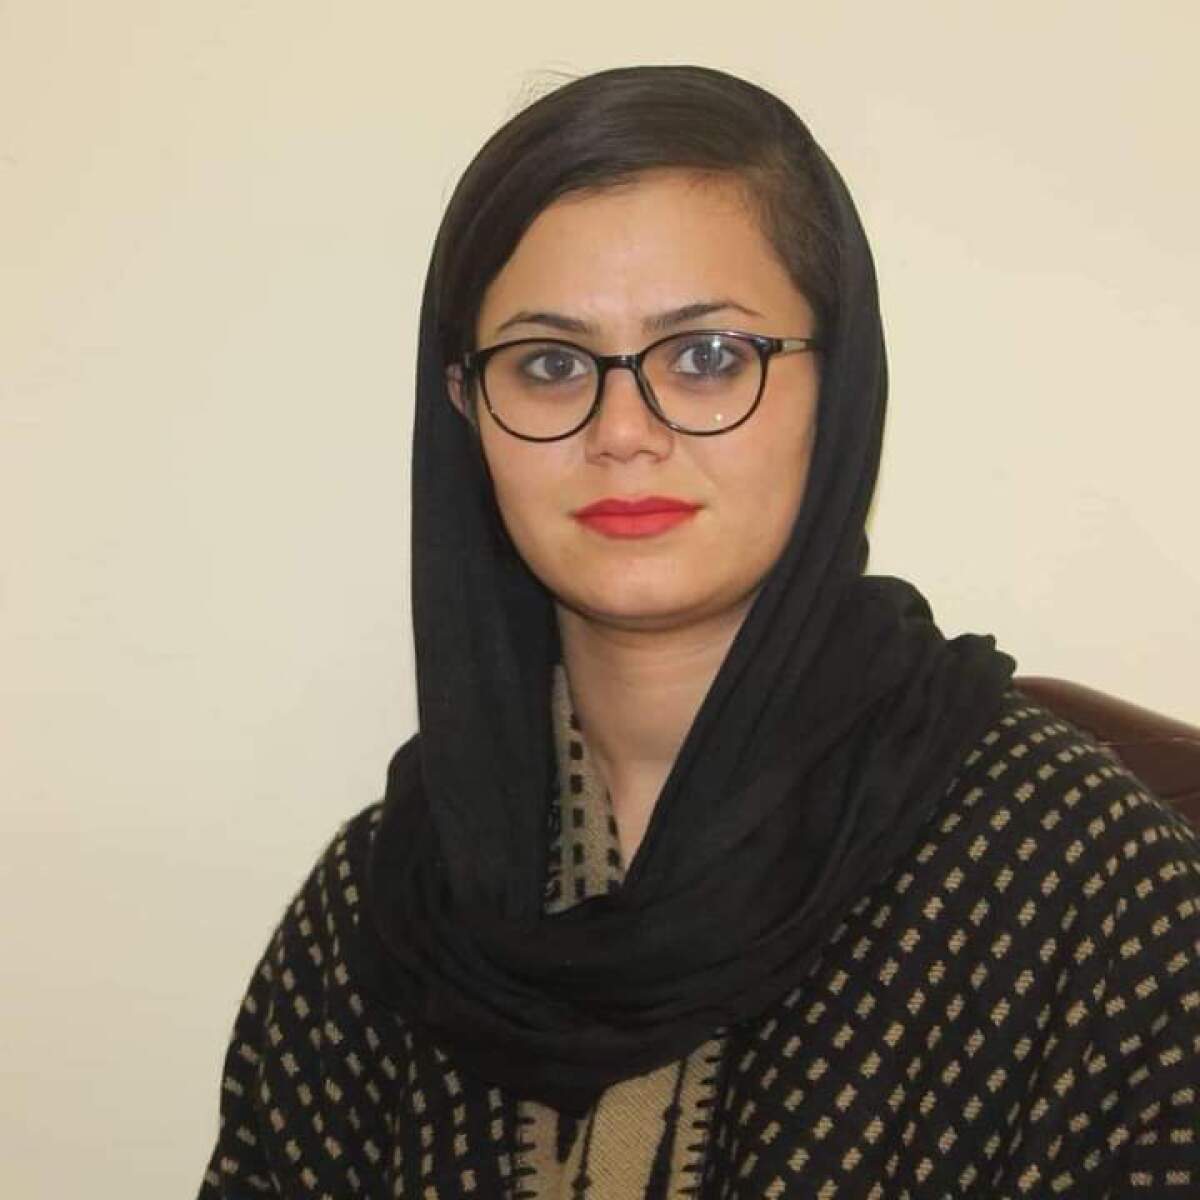 Afghan journalist Tamana Bahar